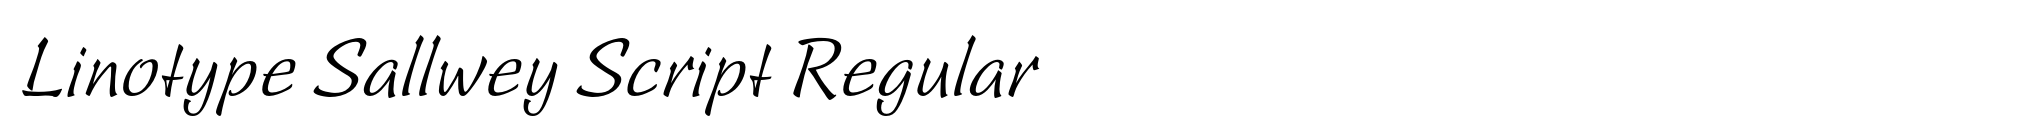 Linotype Sallwey Script Regular image